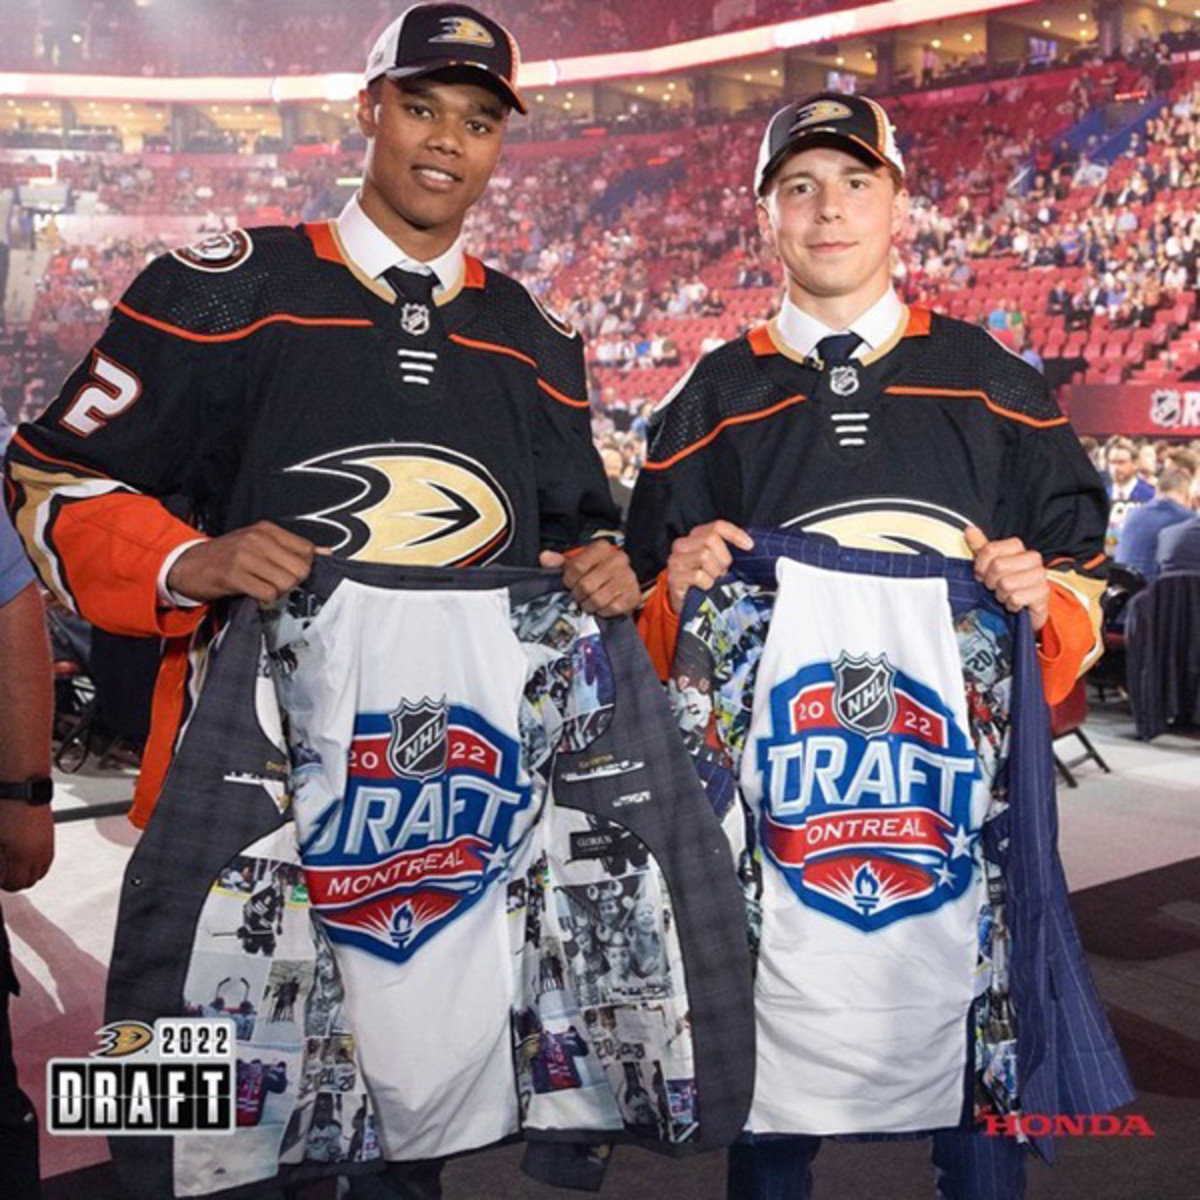 Noah Warren and fellow defenseman Tristan Luneau were both second-round draft picks for the Anaheim Ducks.